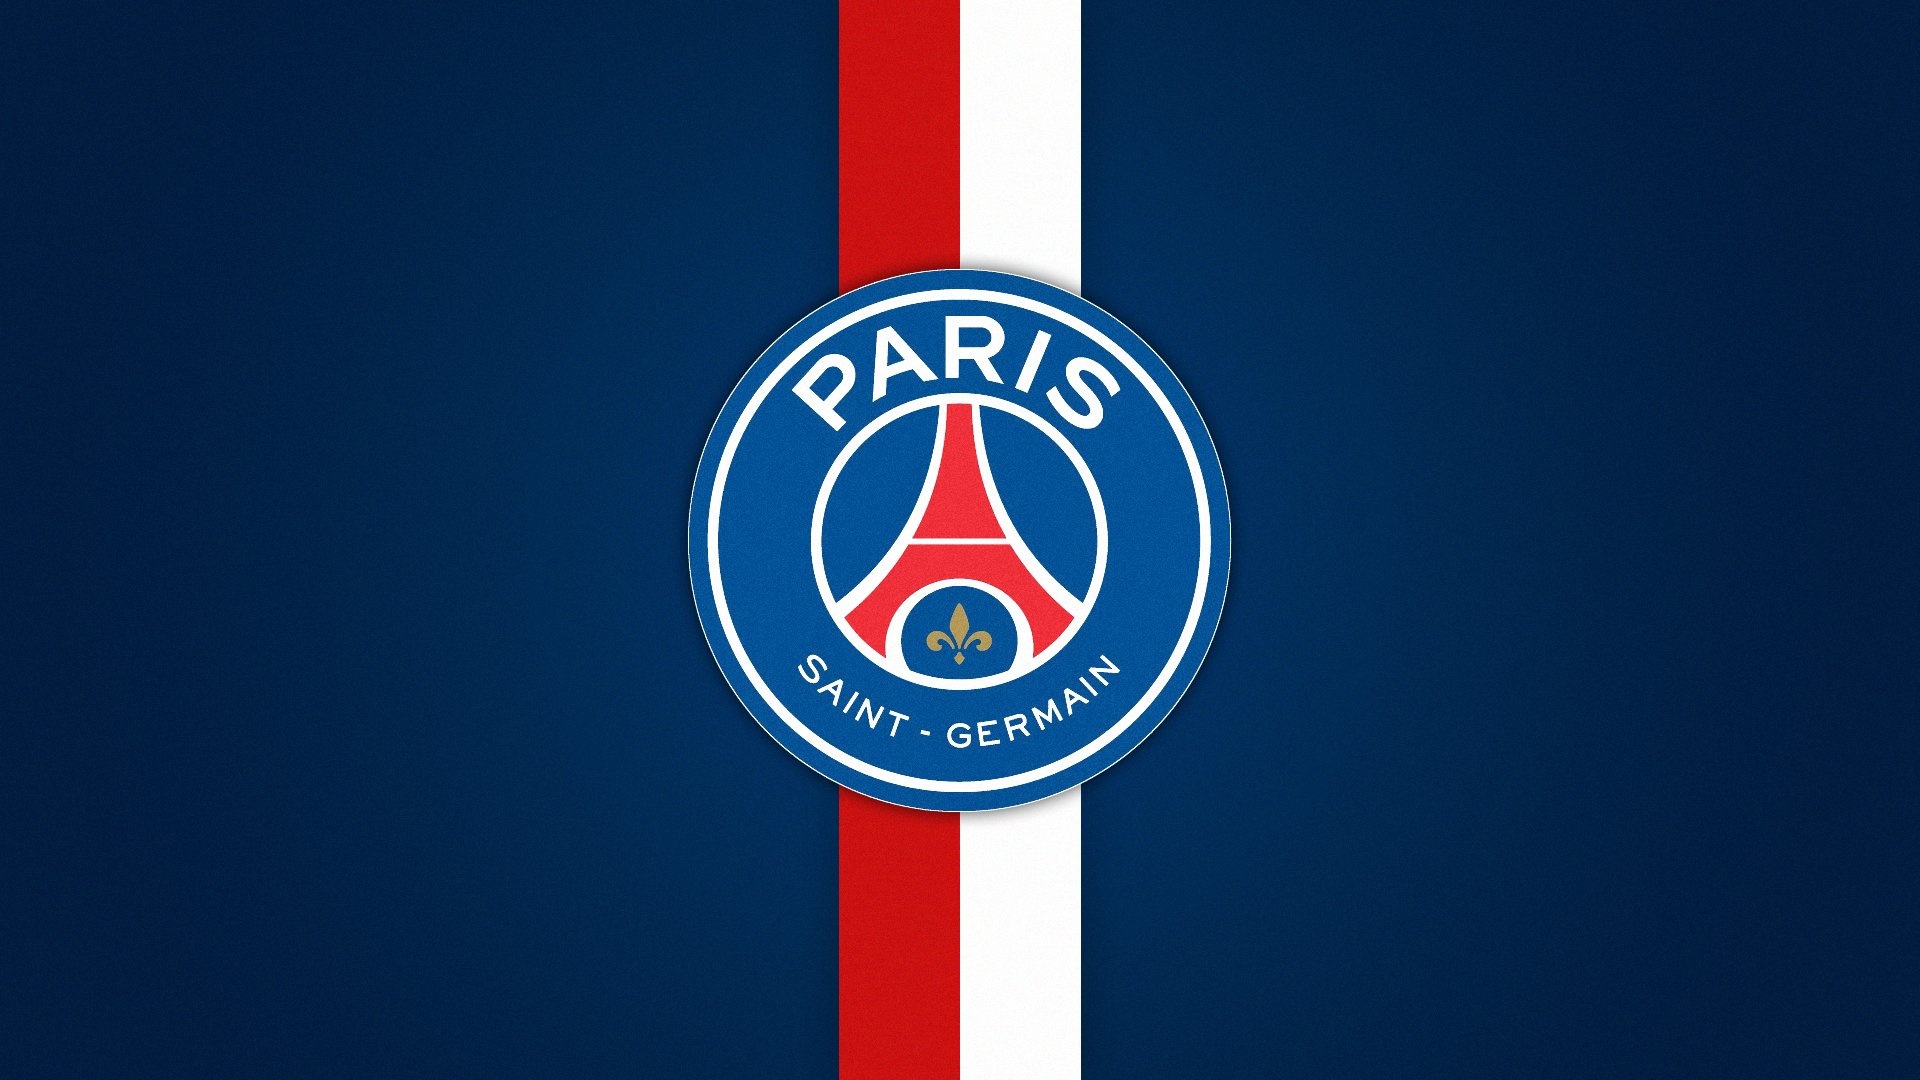 Paris Saint-Germain: The most successful club in football history in France. 1920x1080 Full HD Wallpaper.